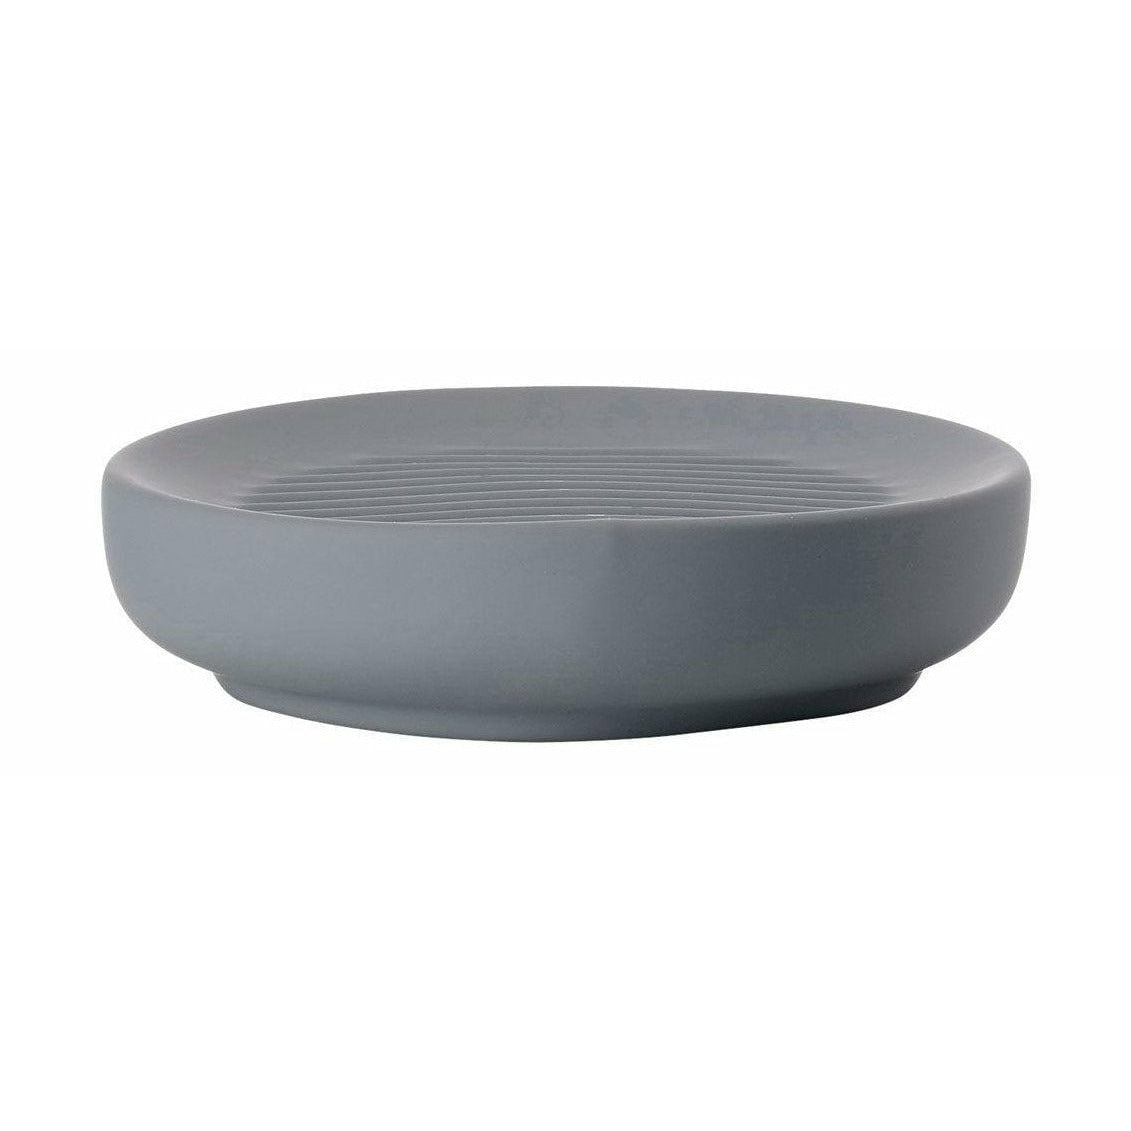 Zone Denmark Ume Soap Dish, Grey